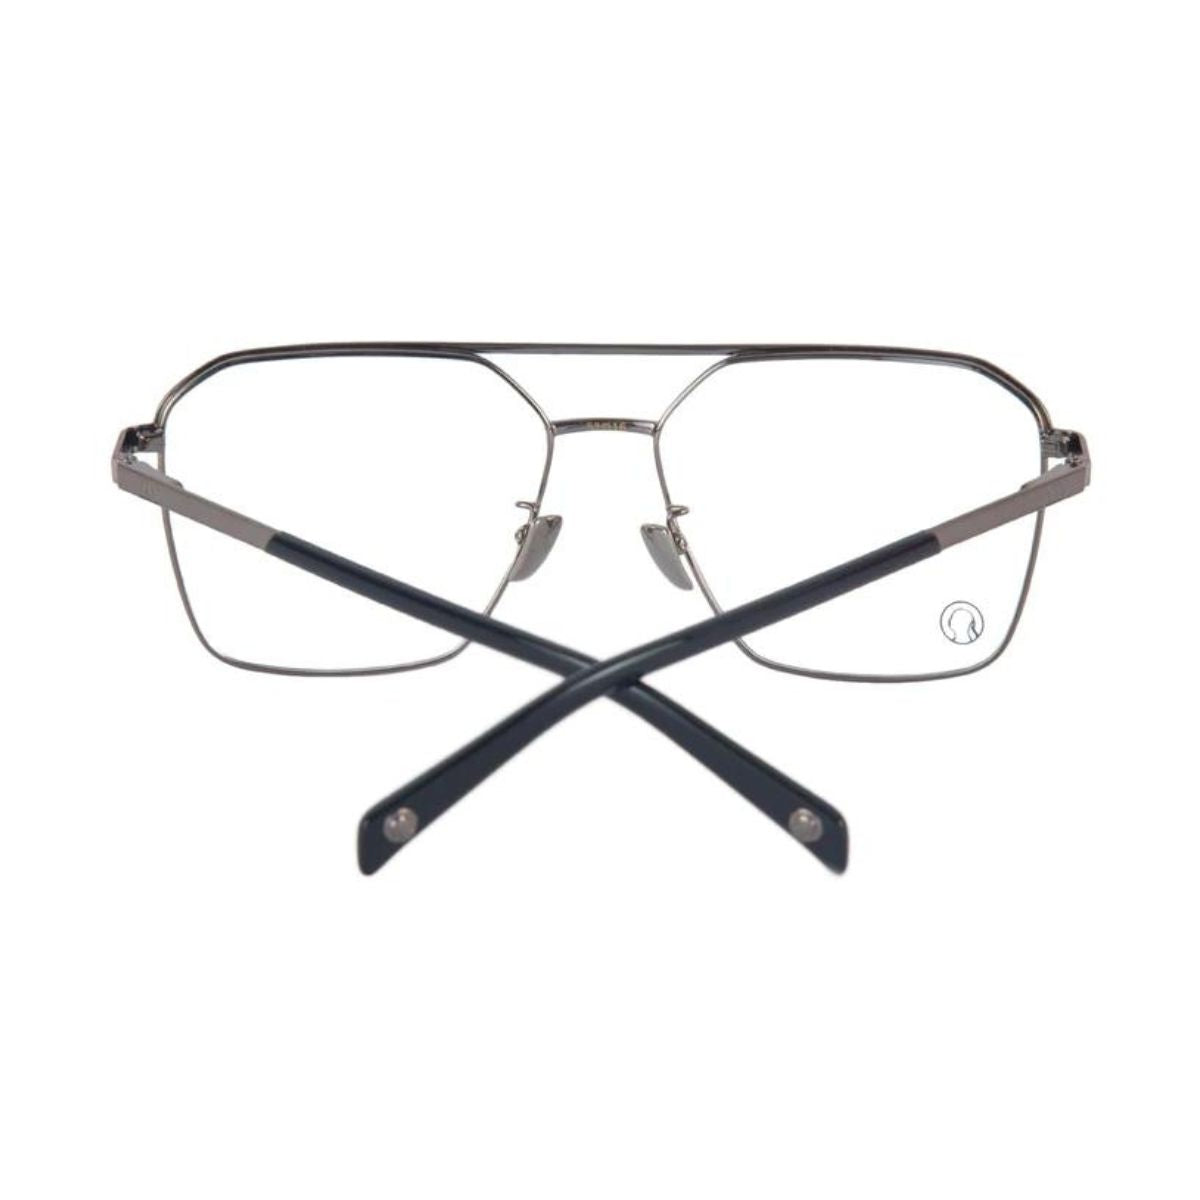 "stylish The Monk Revolution C4  trendy eyewear frame for men's at optorium"